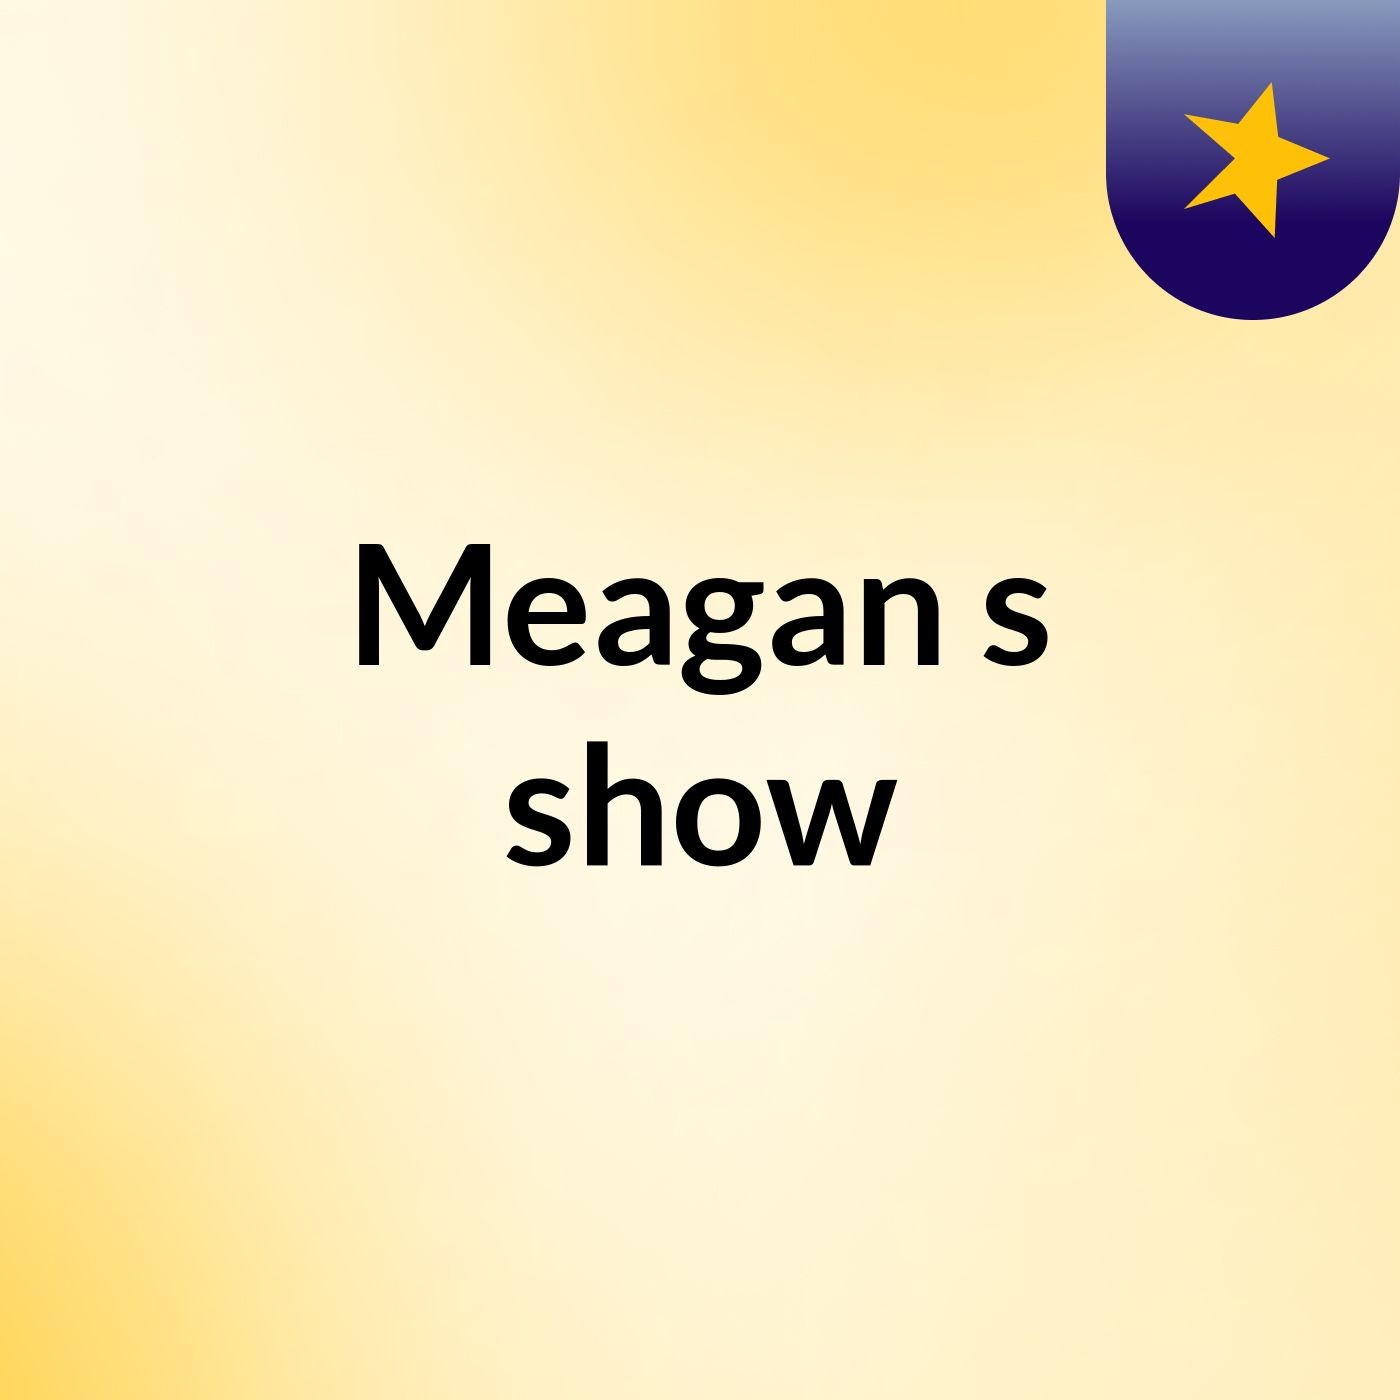 Meagan's show